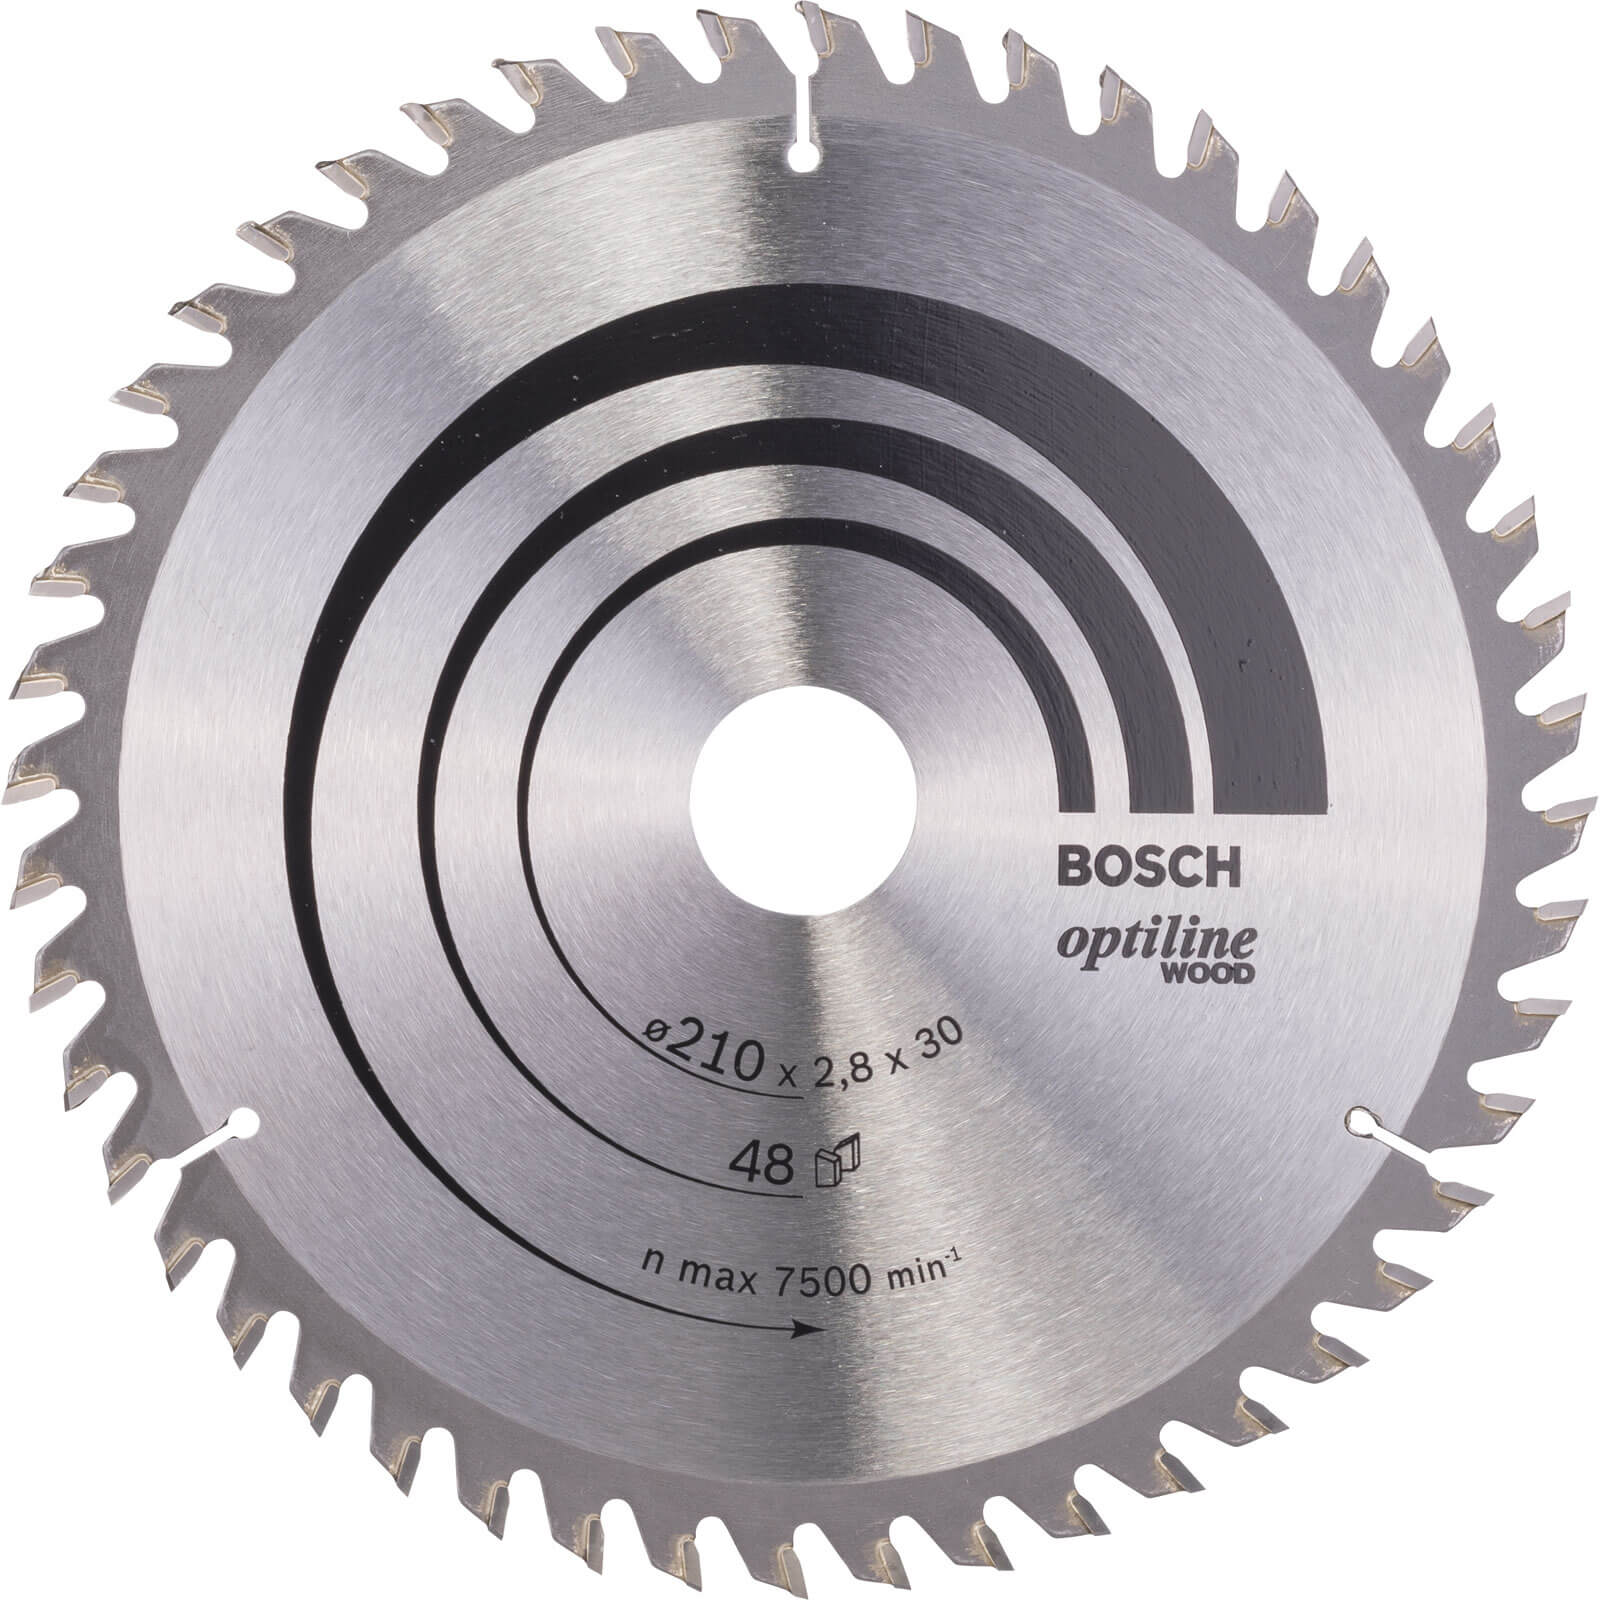 Photo of Bosch Optiline Wood Cutting Saw Blade 210mm 48t 30mm